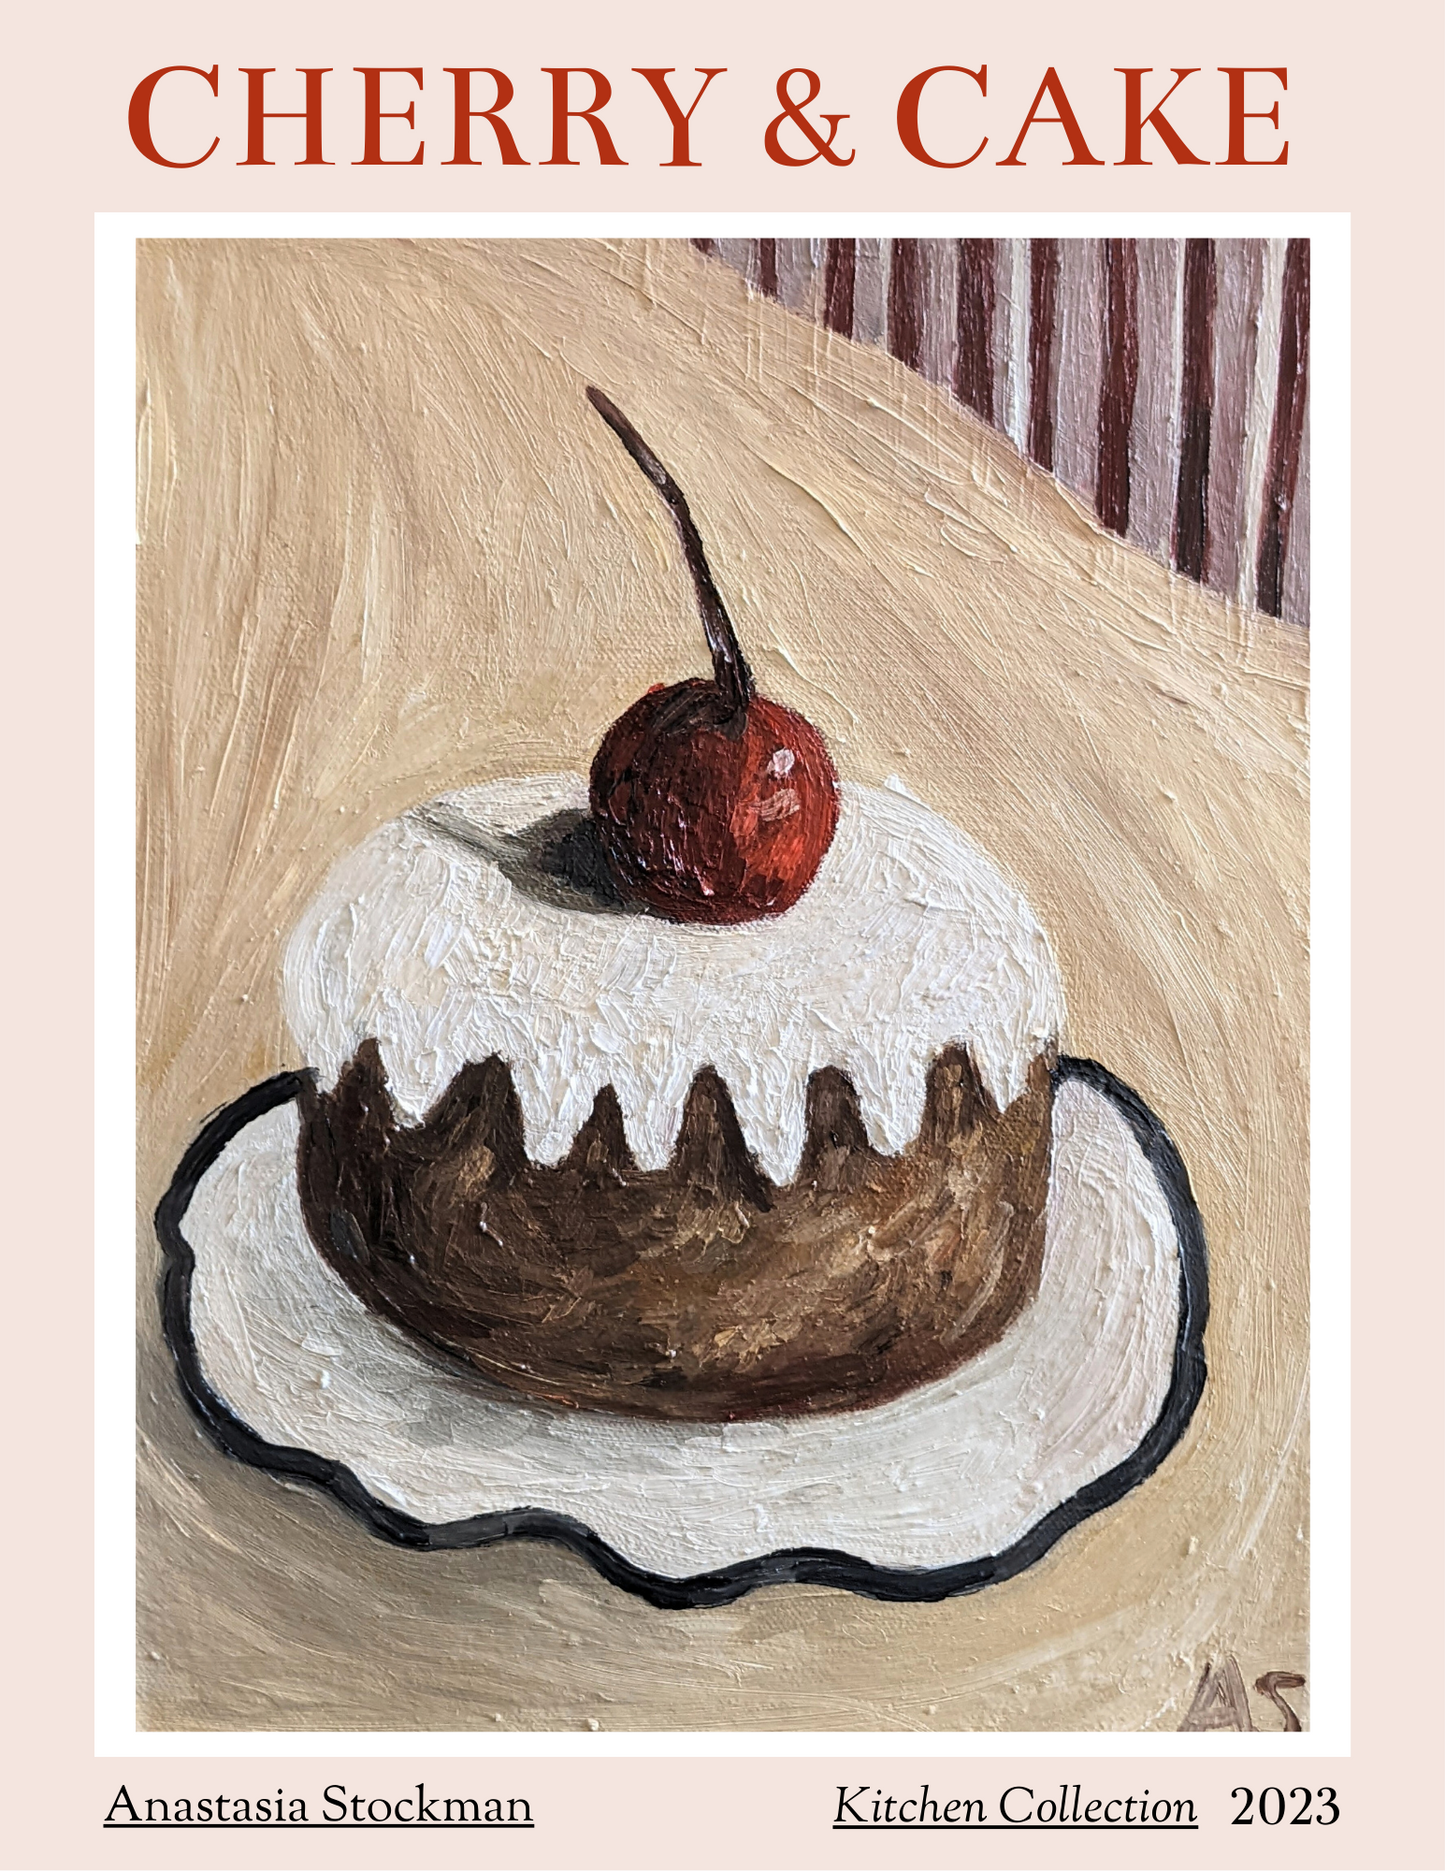 Print - Cherry & Cake